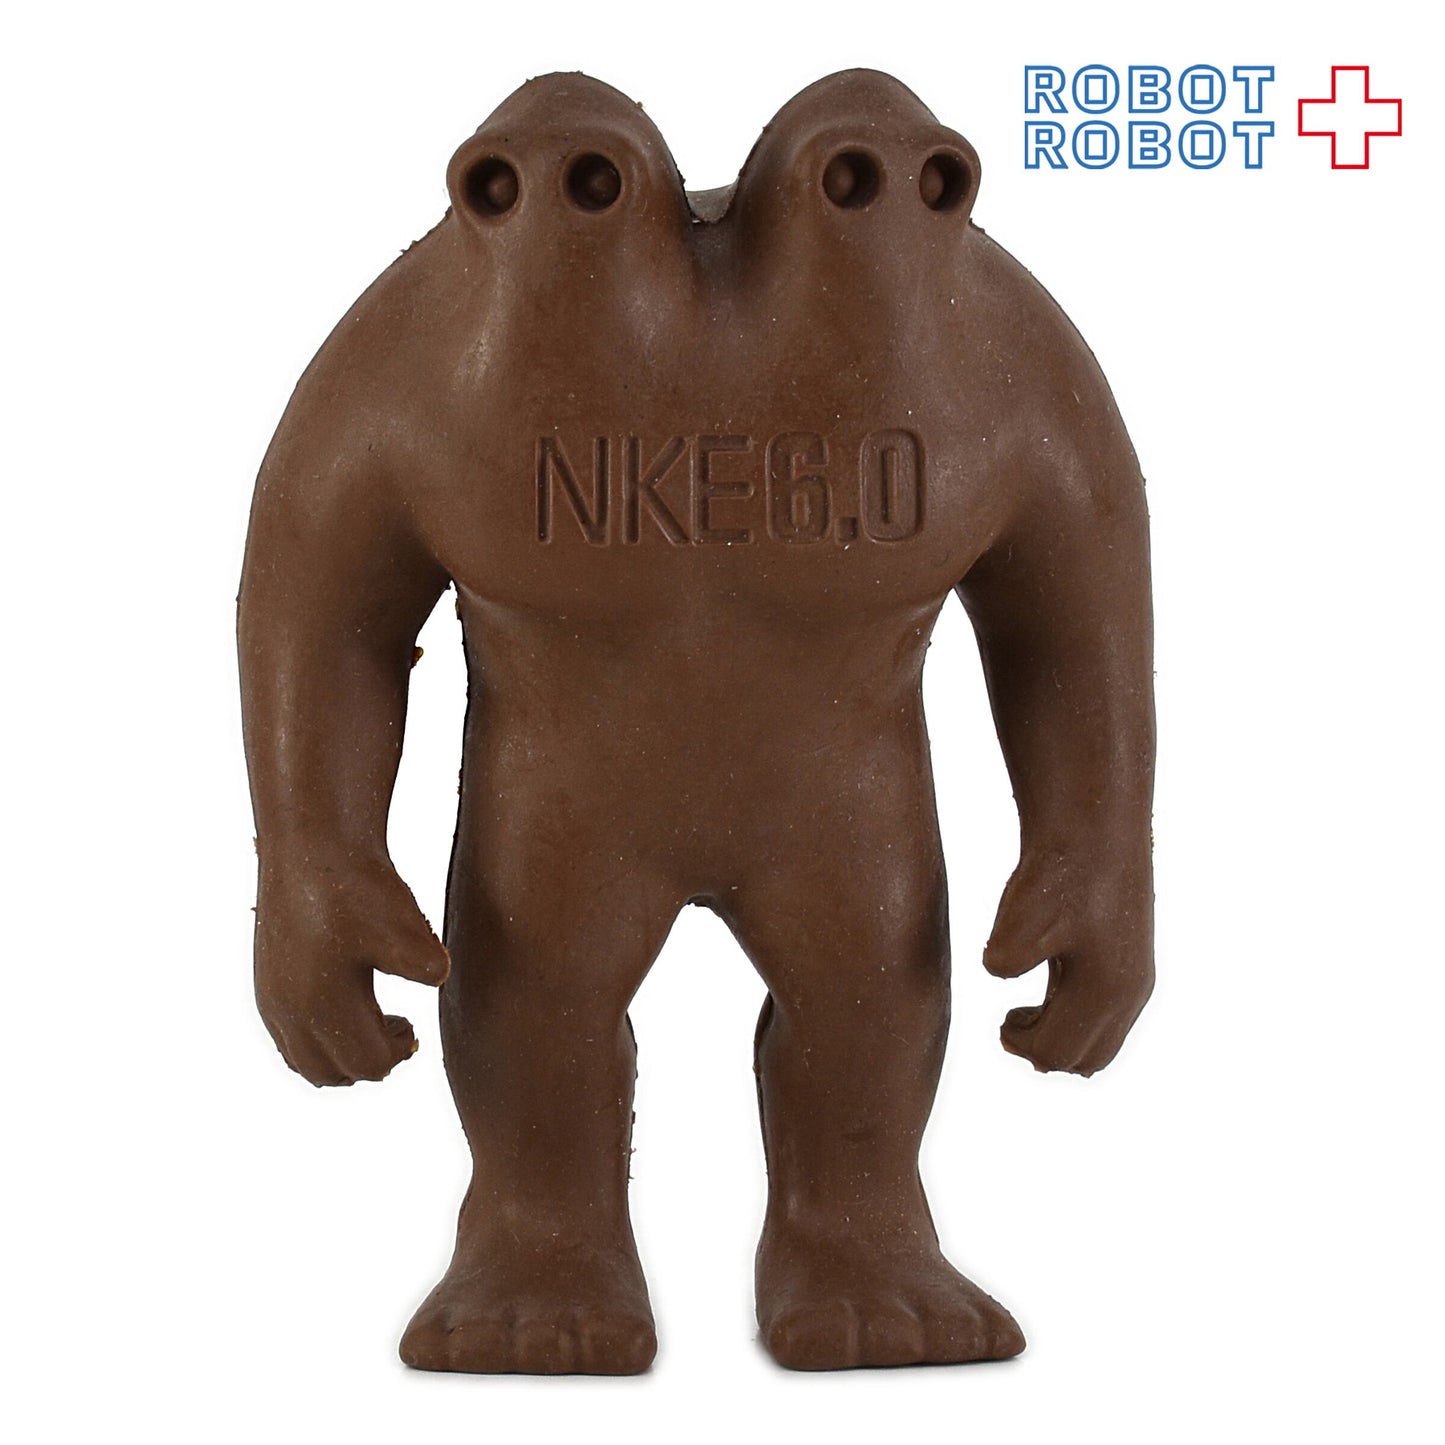 NIKE NKE 6.0 ナイキ 双頭怪人フィギュア 茶色